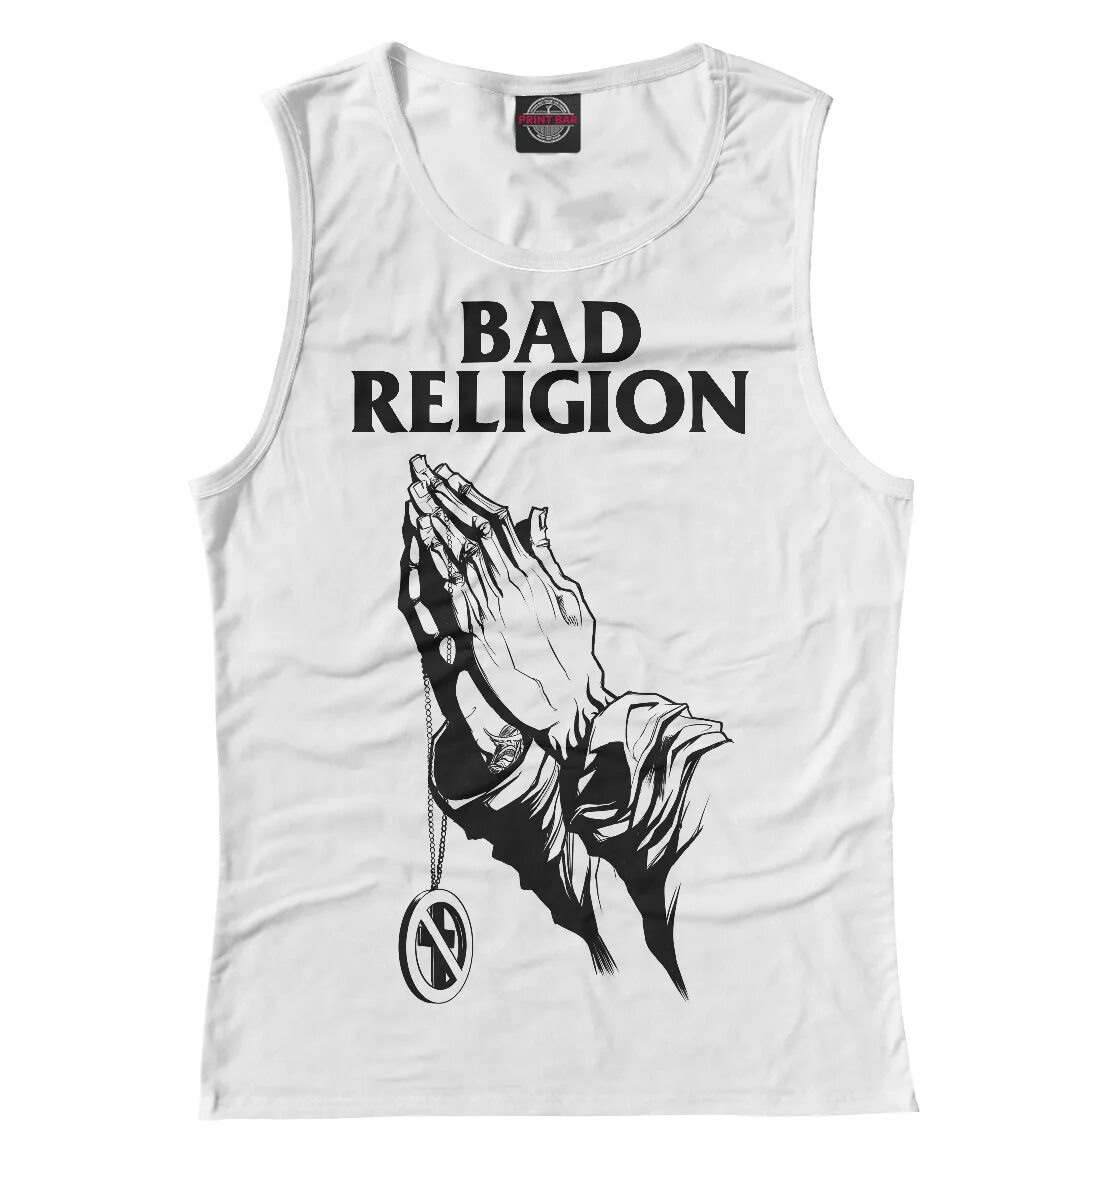 Bad Religion футболка. Футболка Religion мужская. Майка религион. Майки Religion мужские. Bad collection